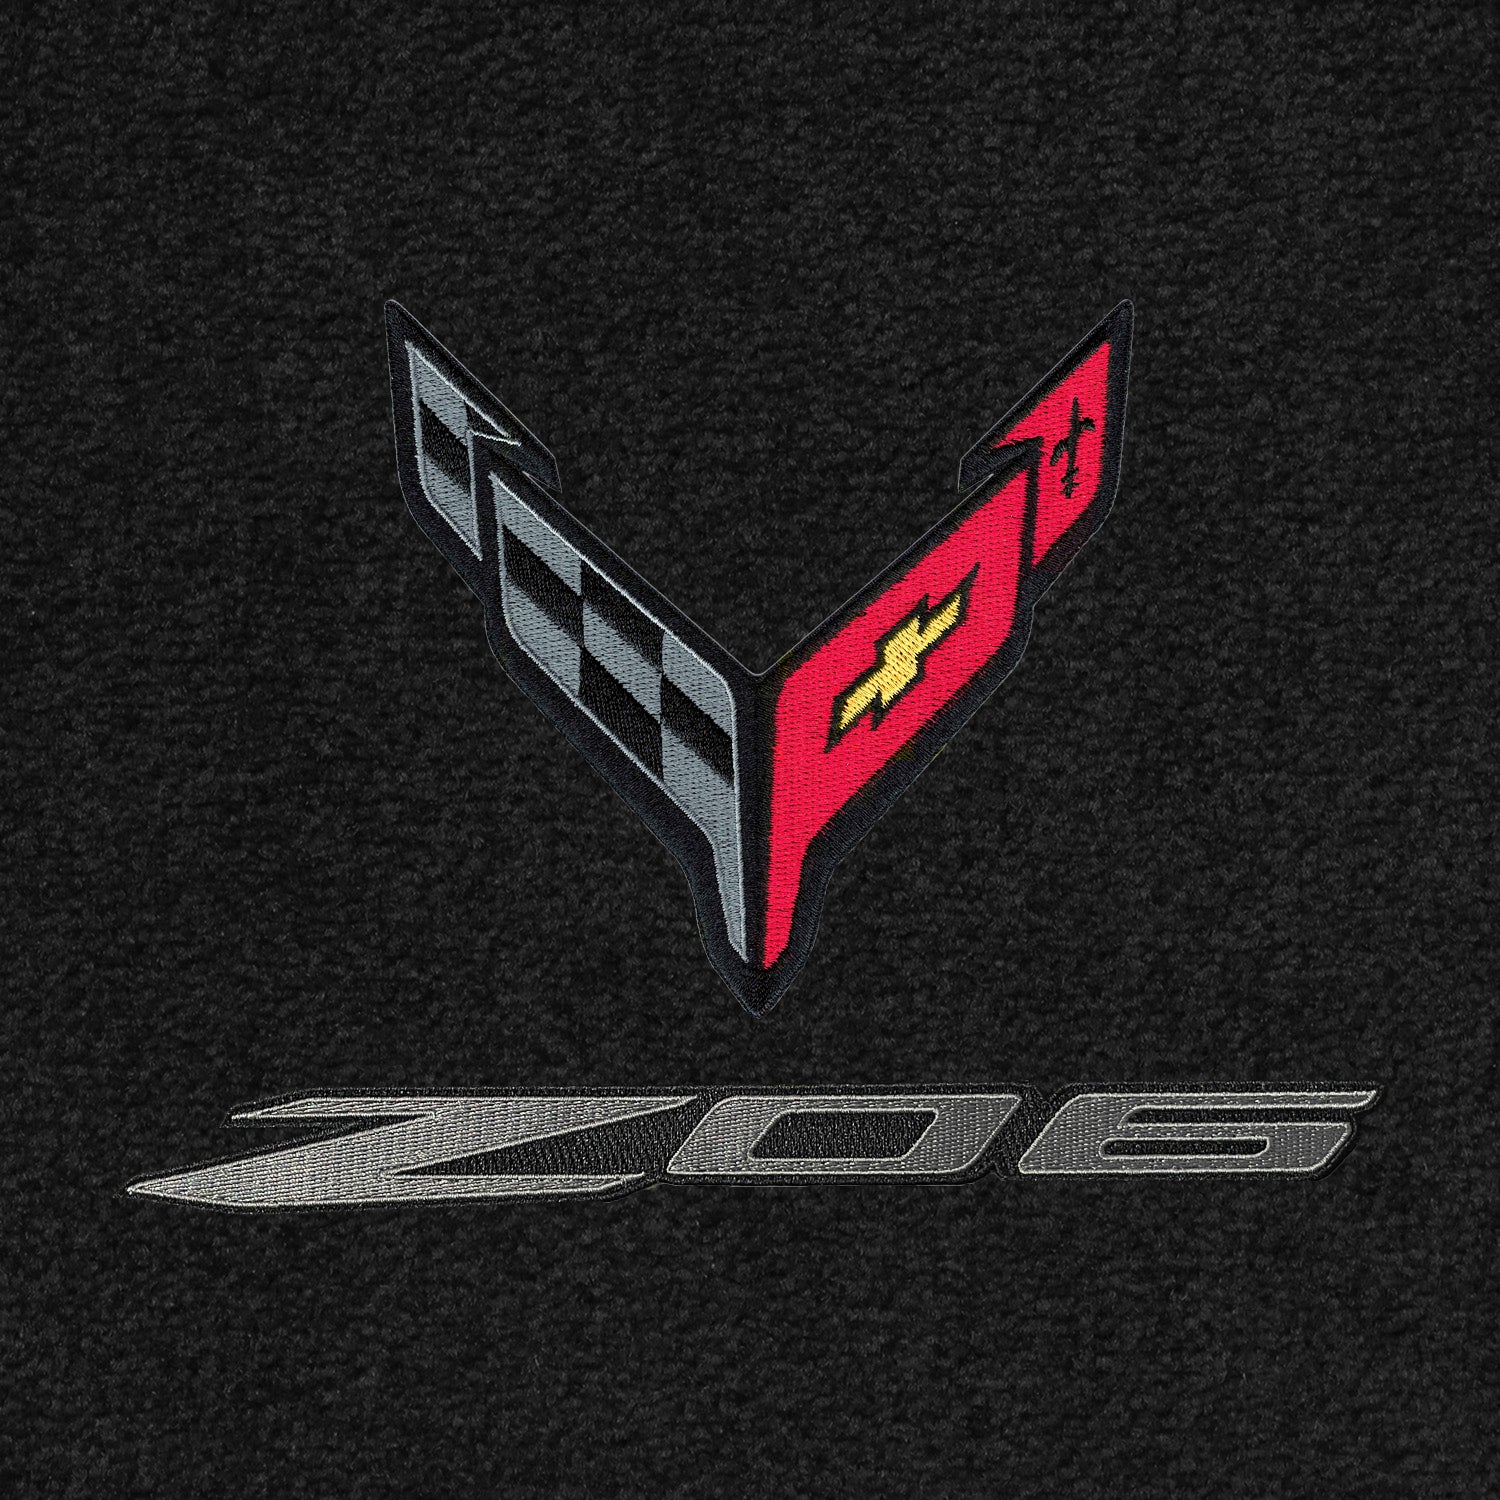 C8/Z06 Corvette Floor Mats - Lloyds Mats with C8 Crossed Flags Over Z06 Logo